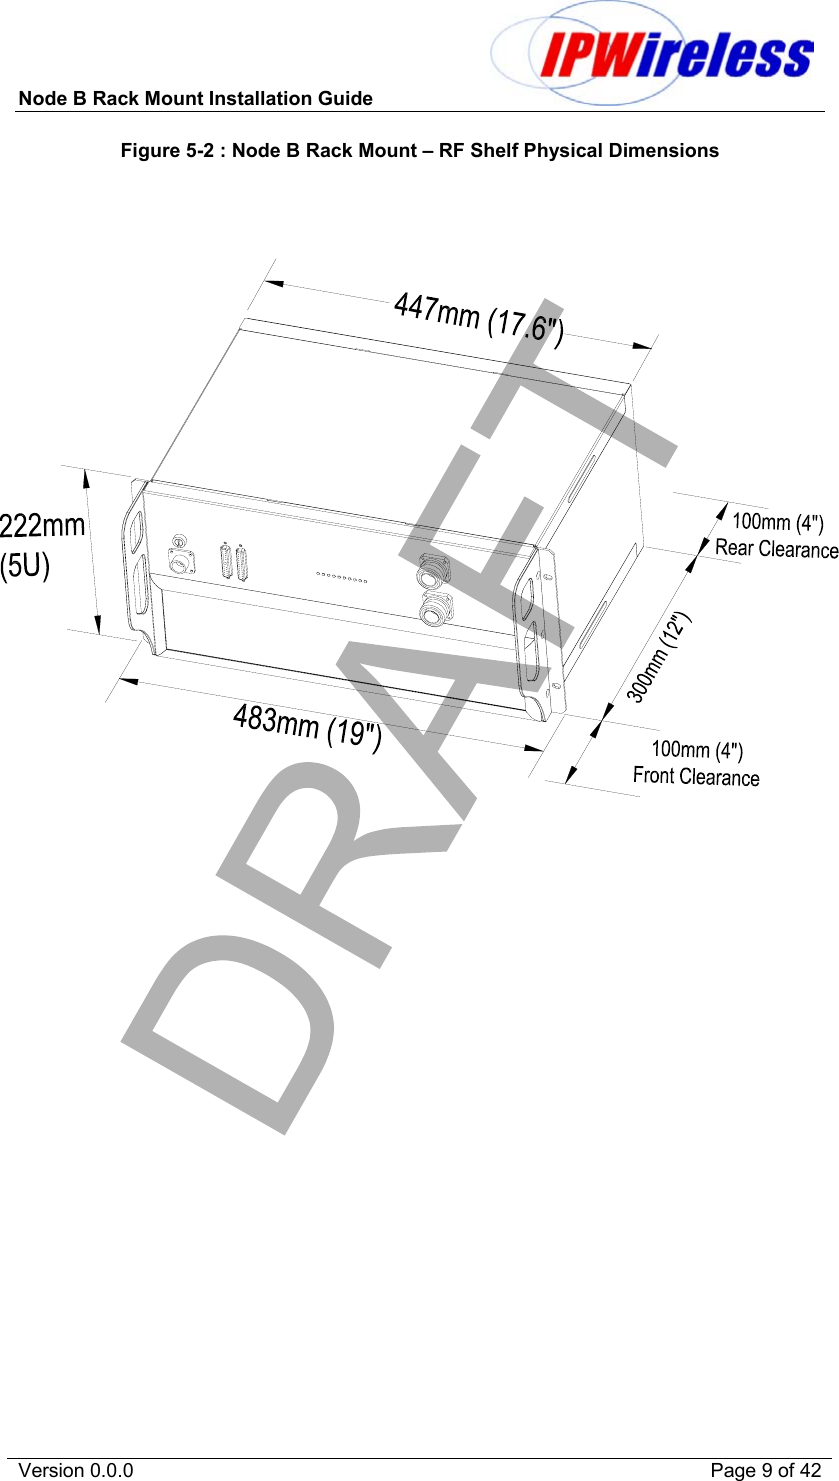 Node B Rack Mount Installation Guide                           Version 0.0.0    Page 9 of 42 Figure 5-2 : Node B Rack Mount – RF Shelf Physical Dimensions              